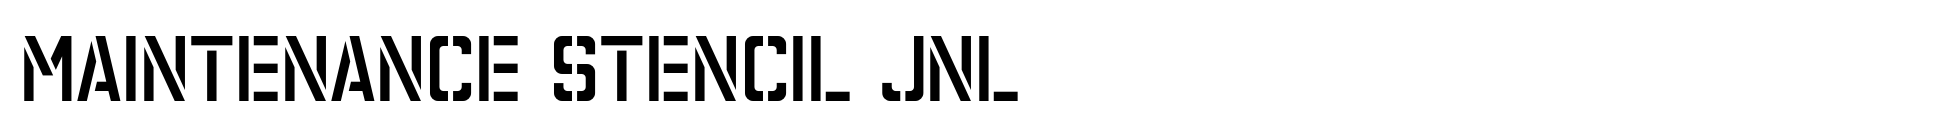 Maintenance Stencil JNL